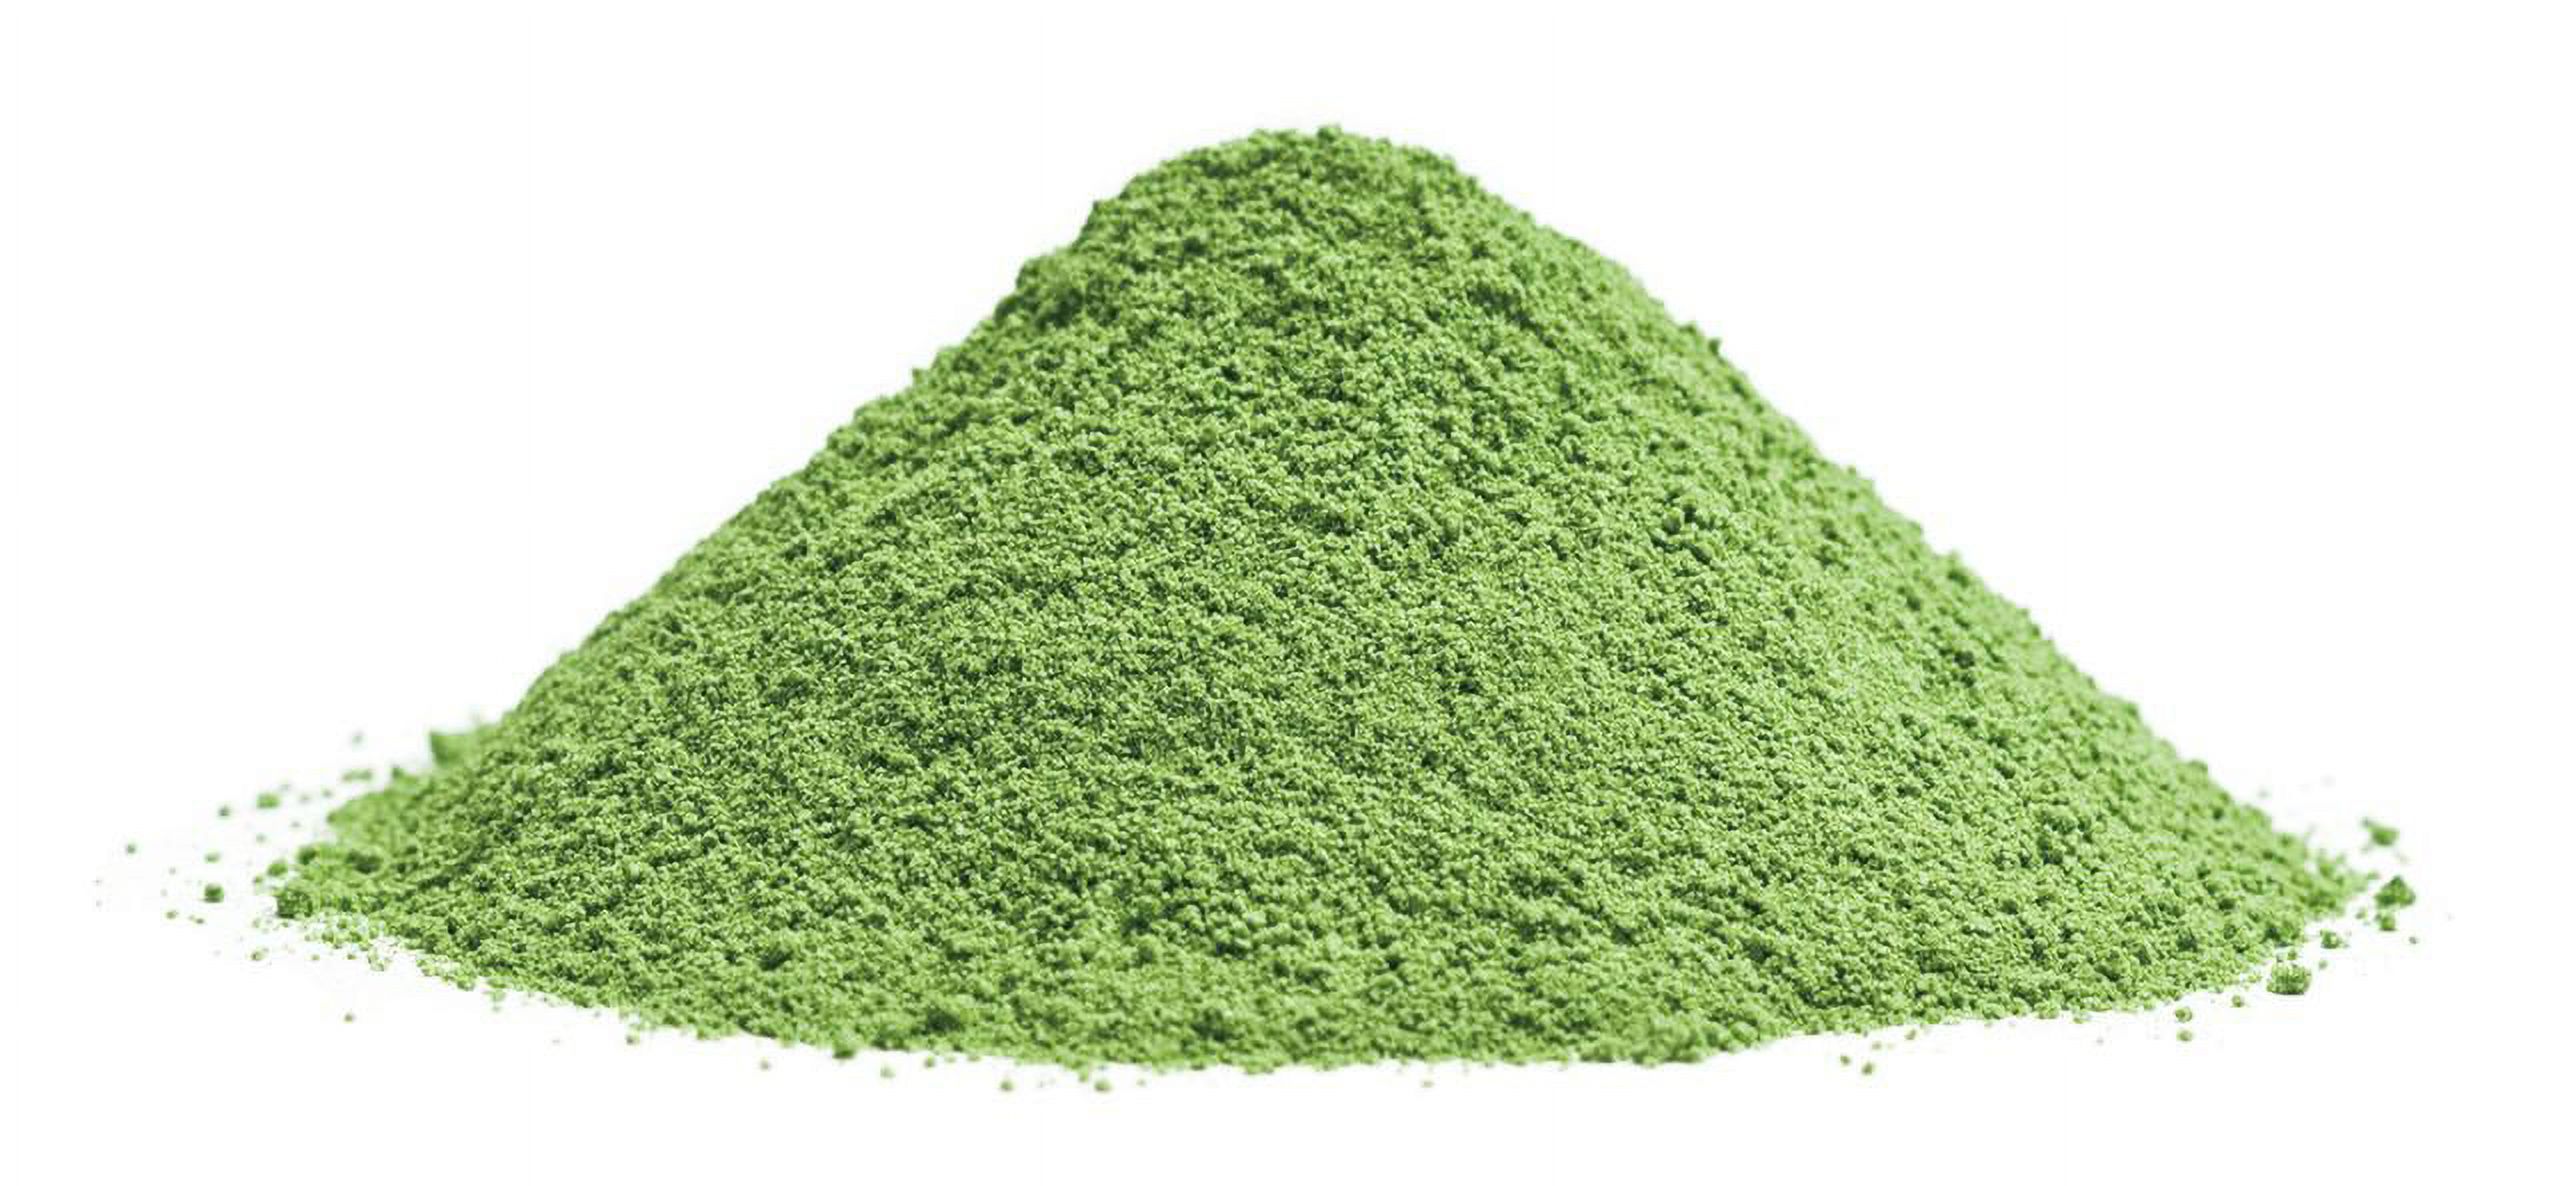 Yamamoto kanpoh 100% young barley grass powder, 44 packs - image 3 of 4